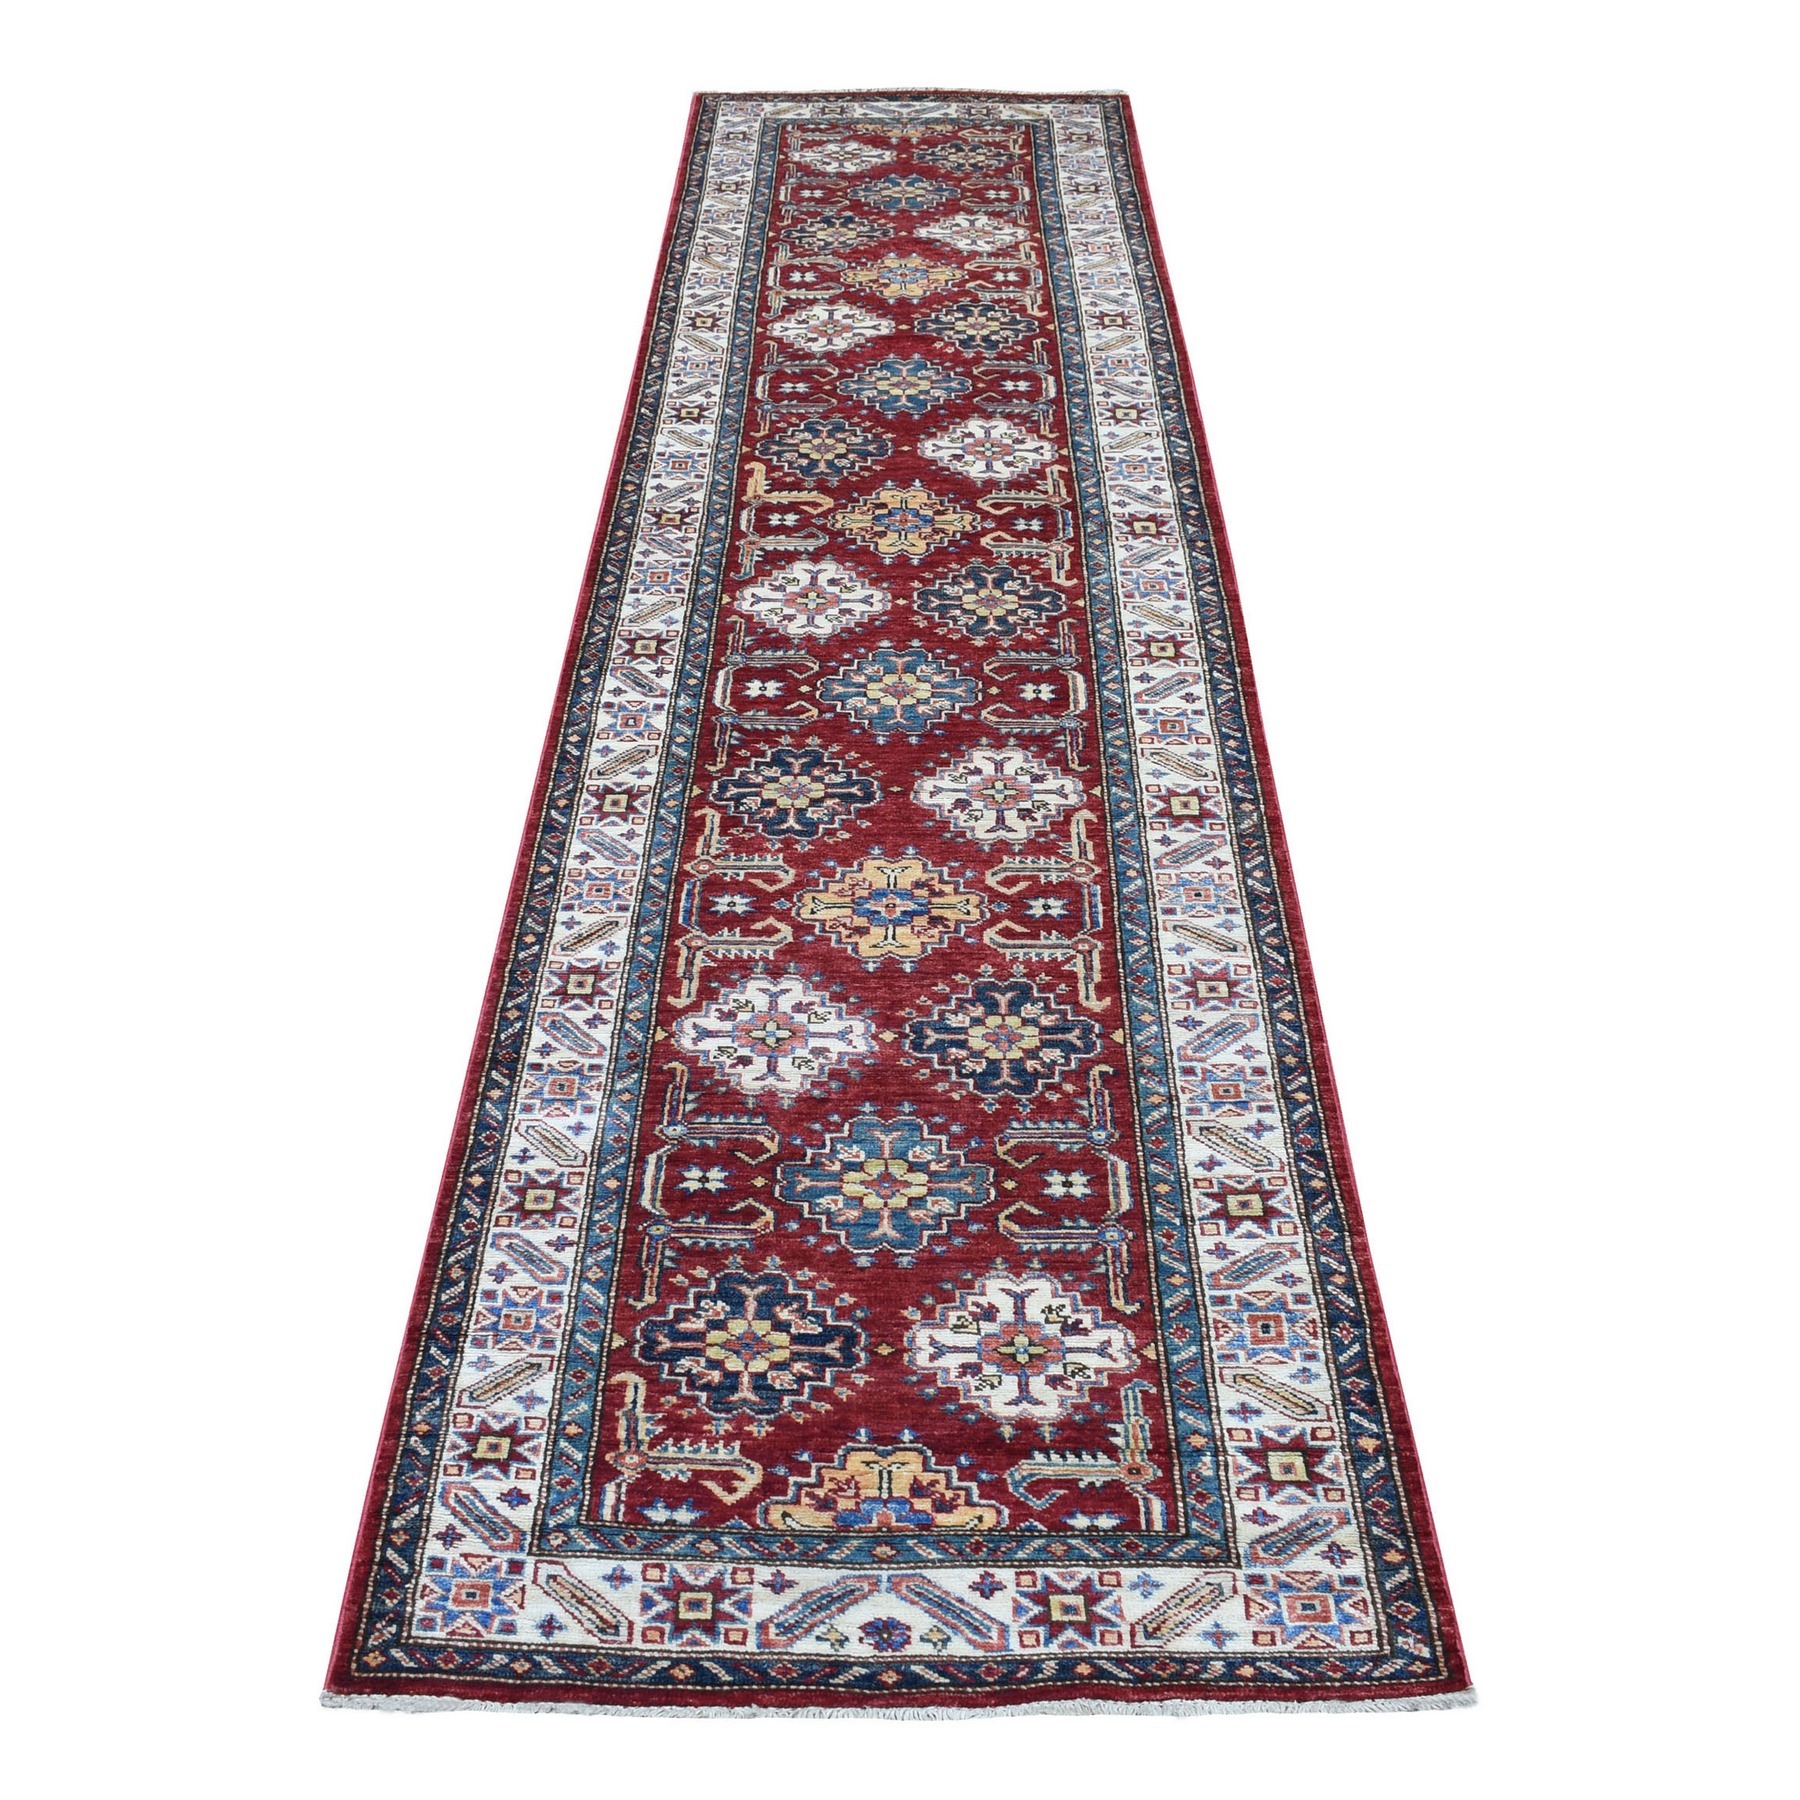 2'8"x10'1" Hand Woven Deep Red Super Kazak with Geometric Design Soft Afghan Wool Oriental Runner Rug 